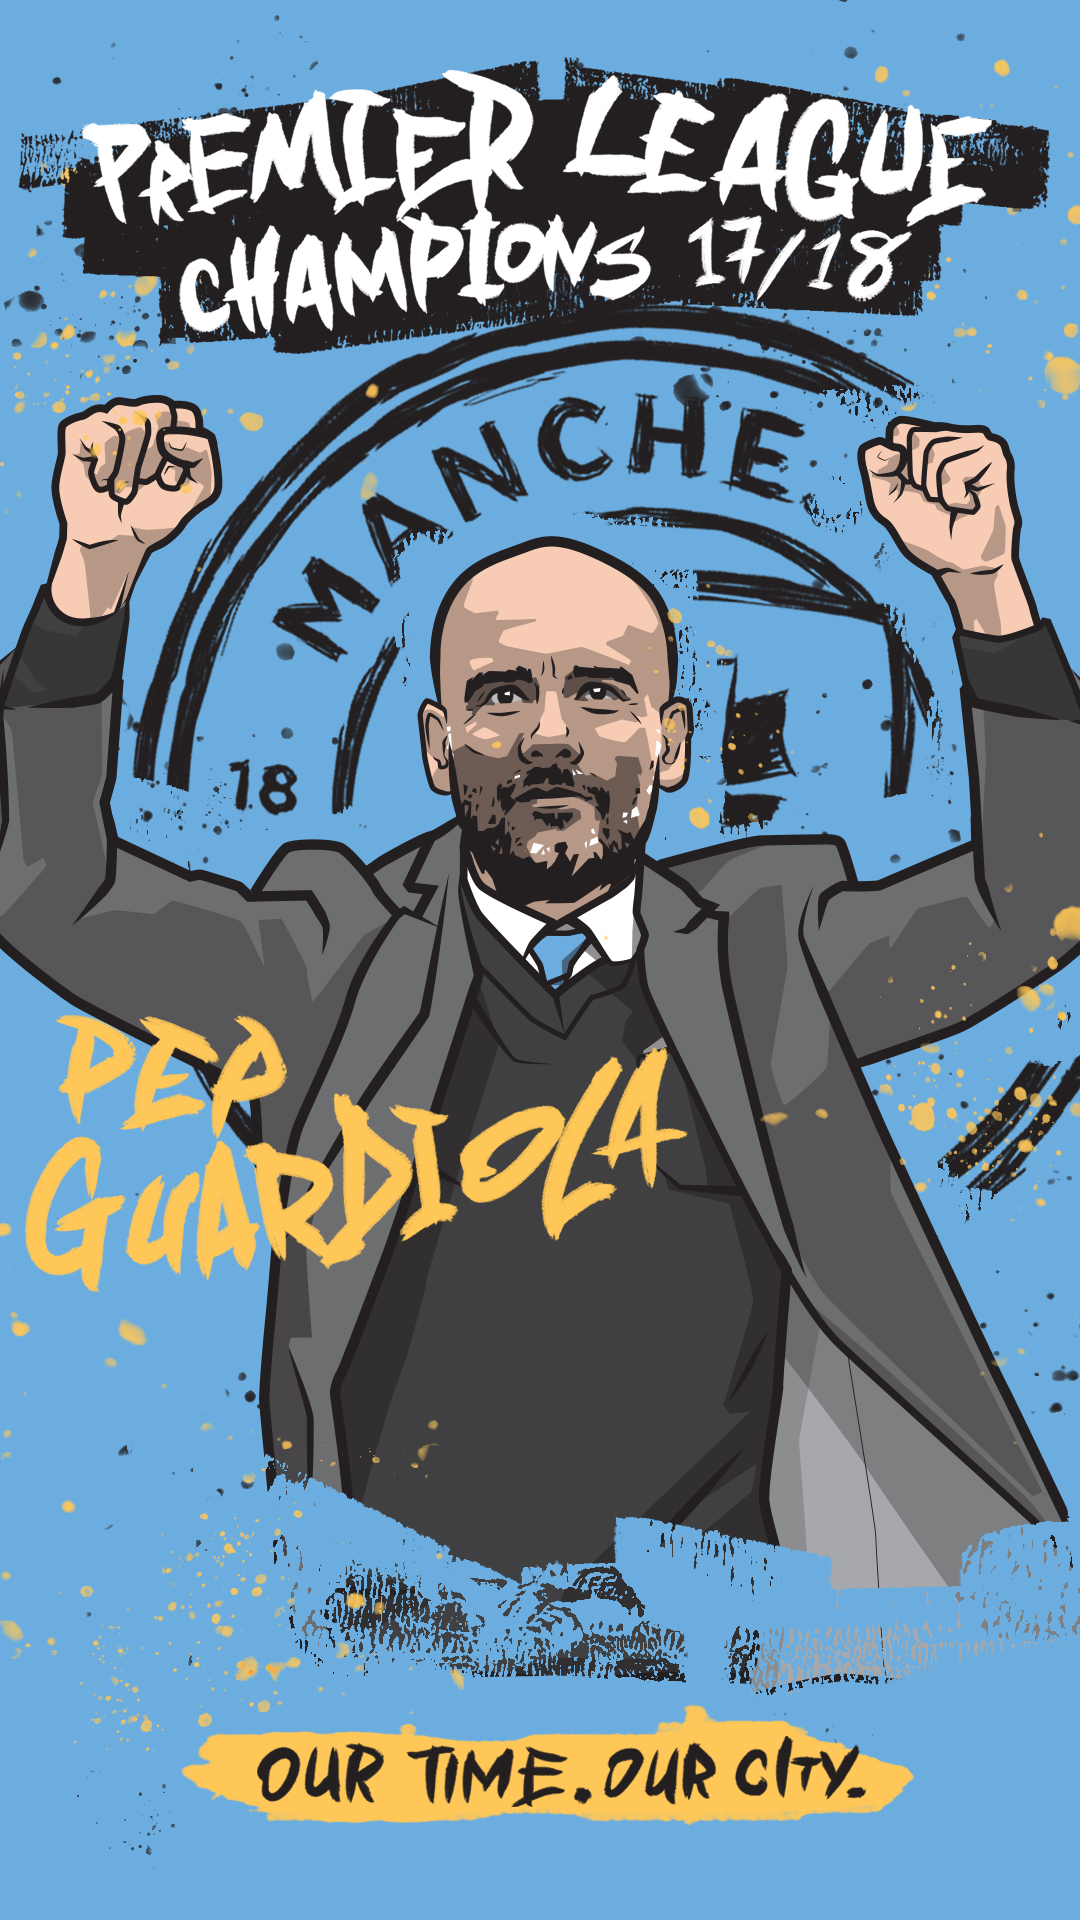 Manager - Manchester , HD Wallpaper & Backgrounds